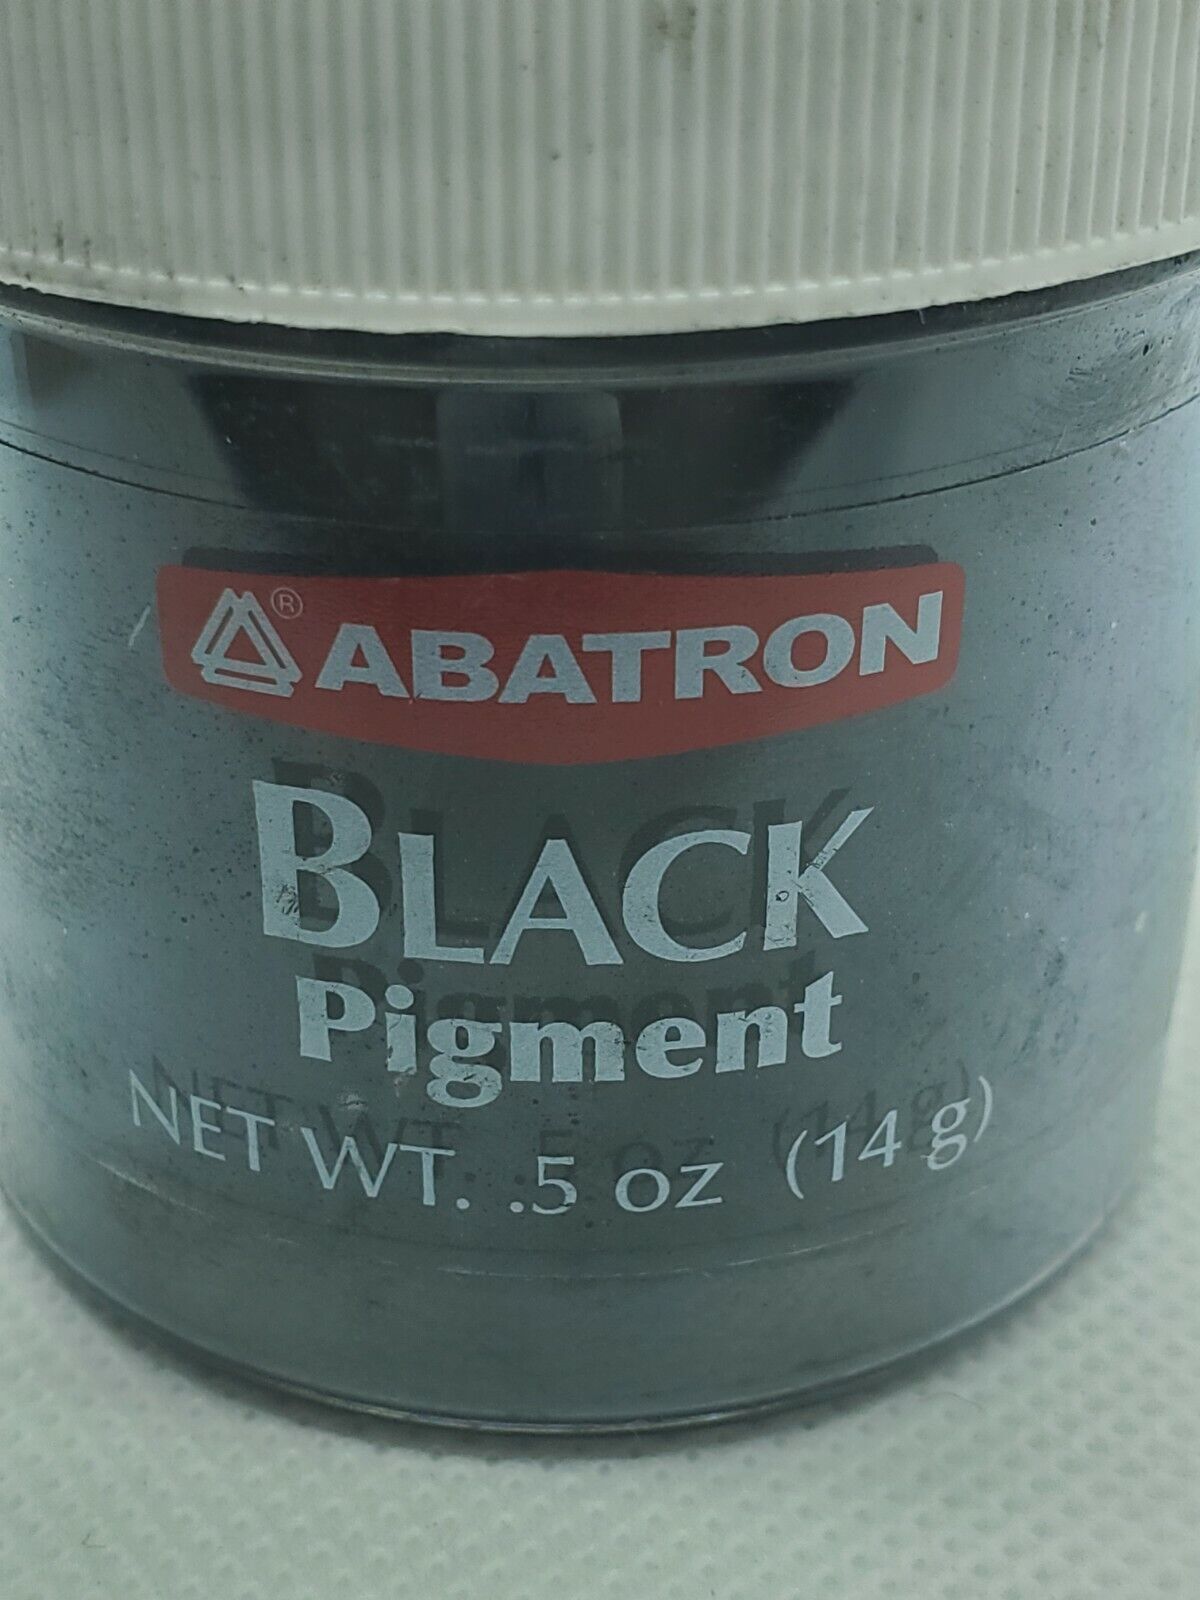 Primary image for Abatron BLPIGR Black Pigment, .5 Oz (14g)